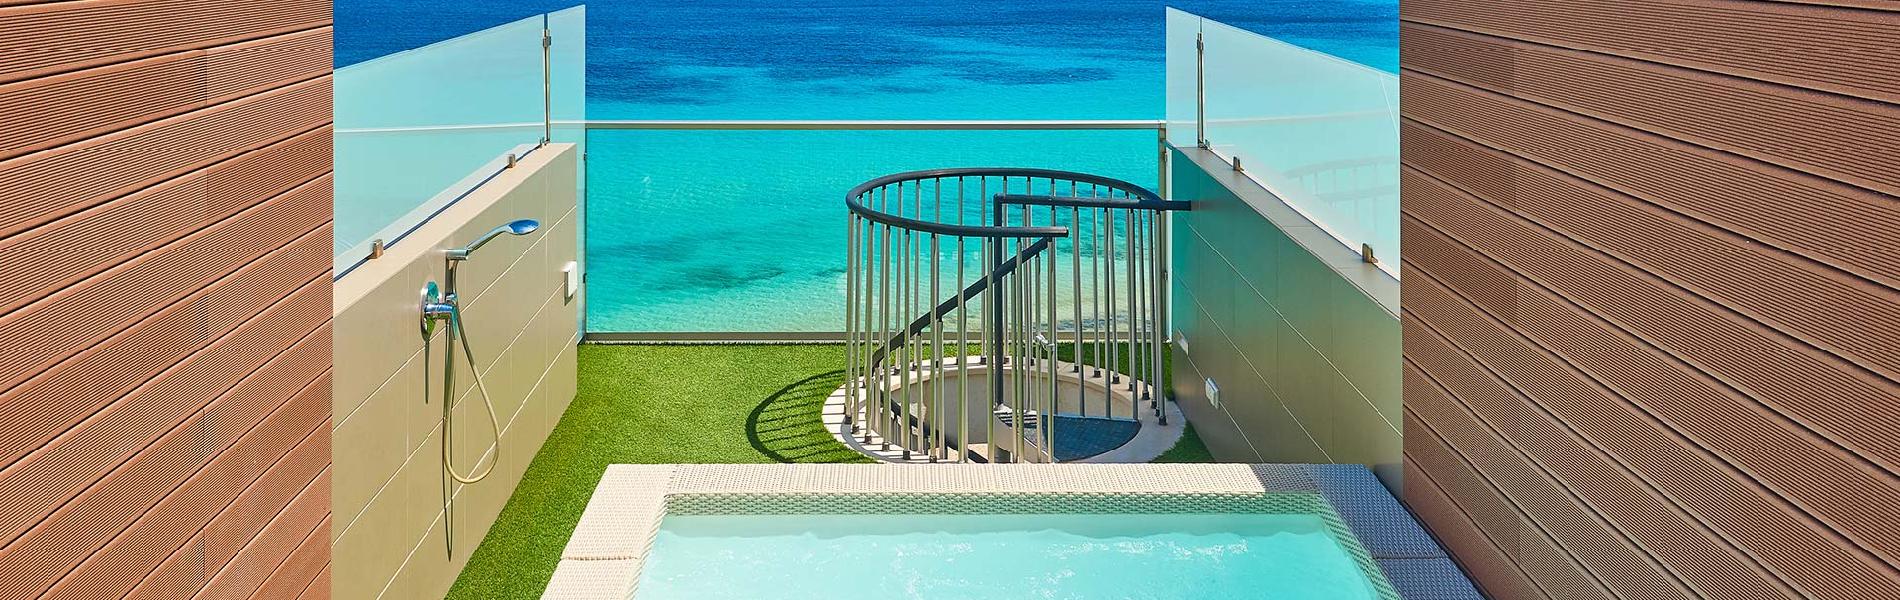 Doble Duplex Protur Playa Cala Millor Hotel